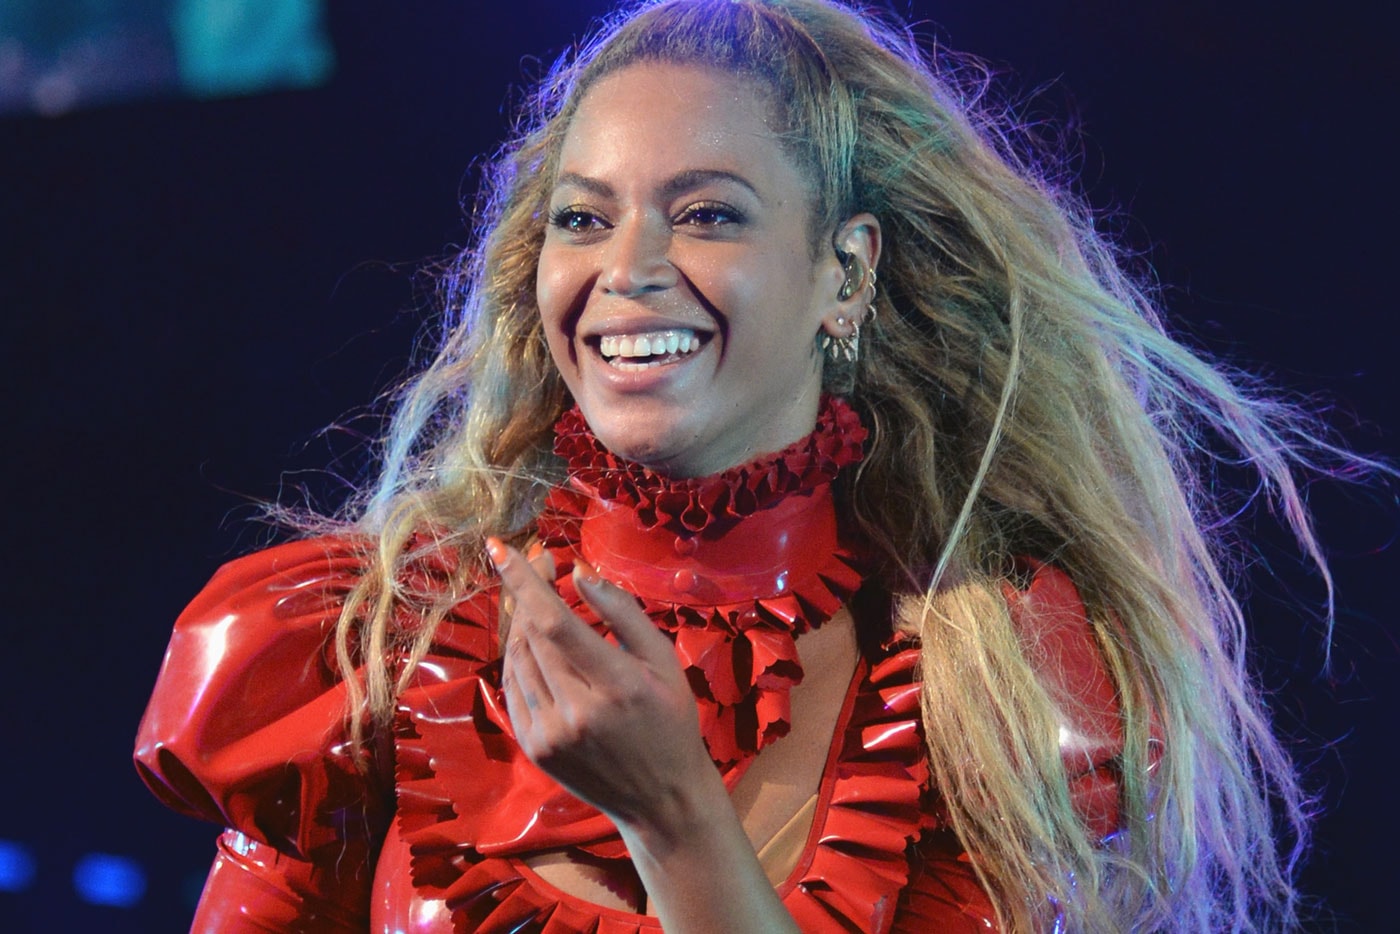 Watch Beyoncé Help Her Creative Director Propose Onstage During "Single Ladies"